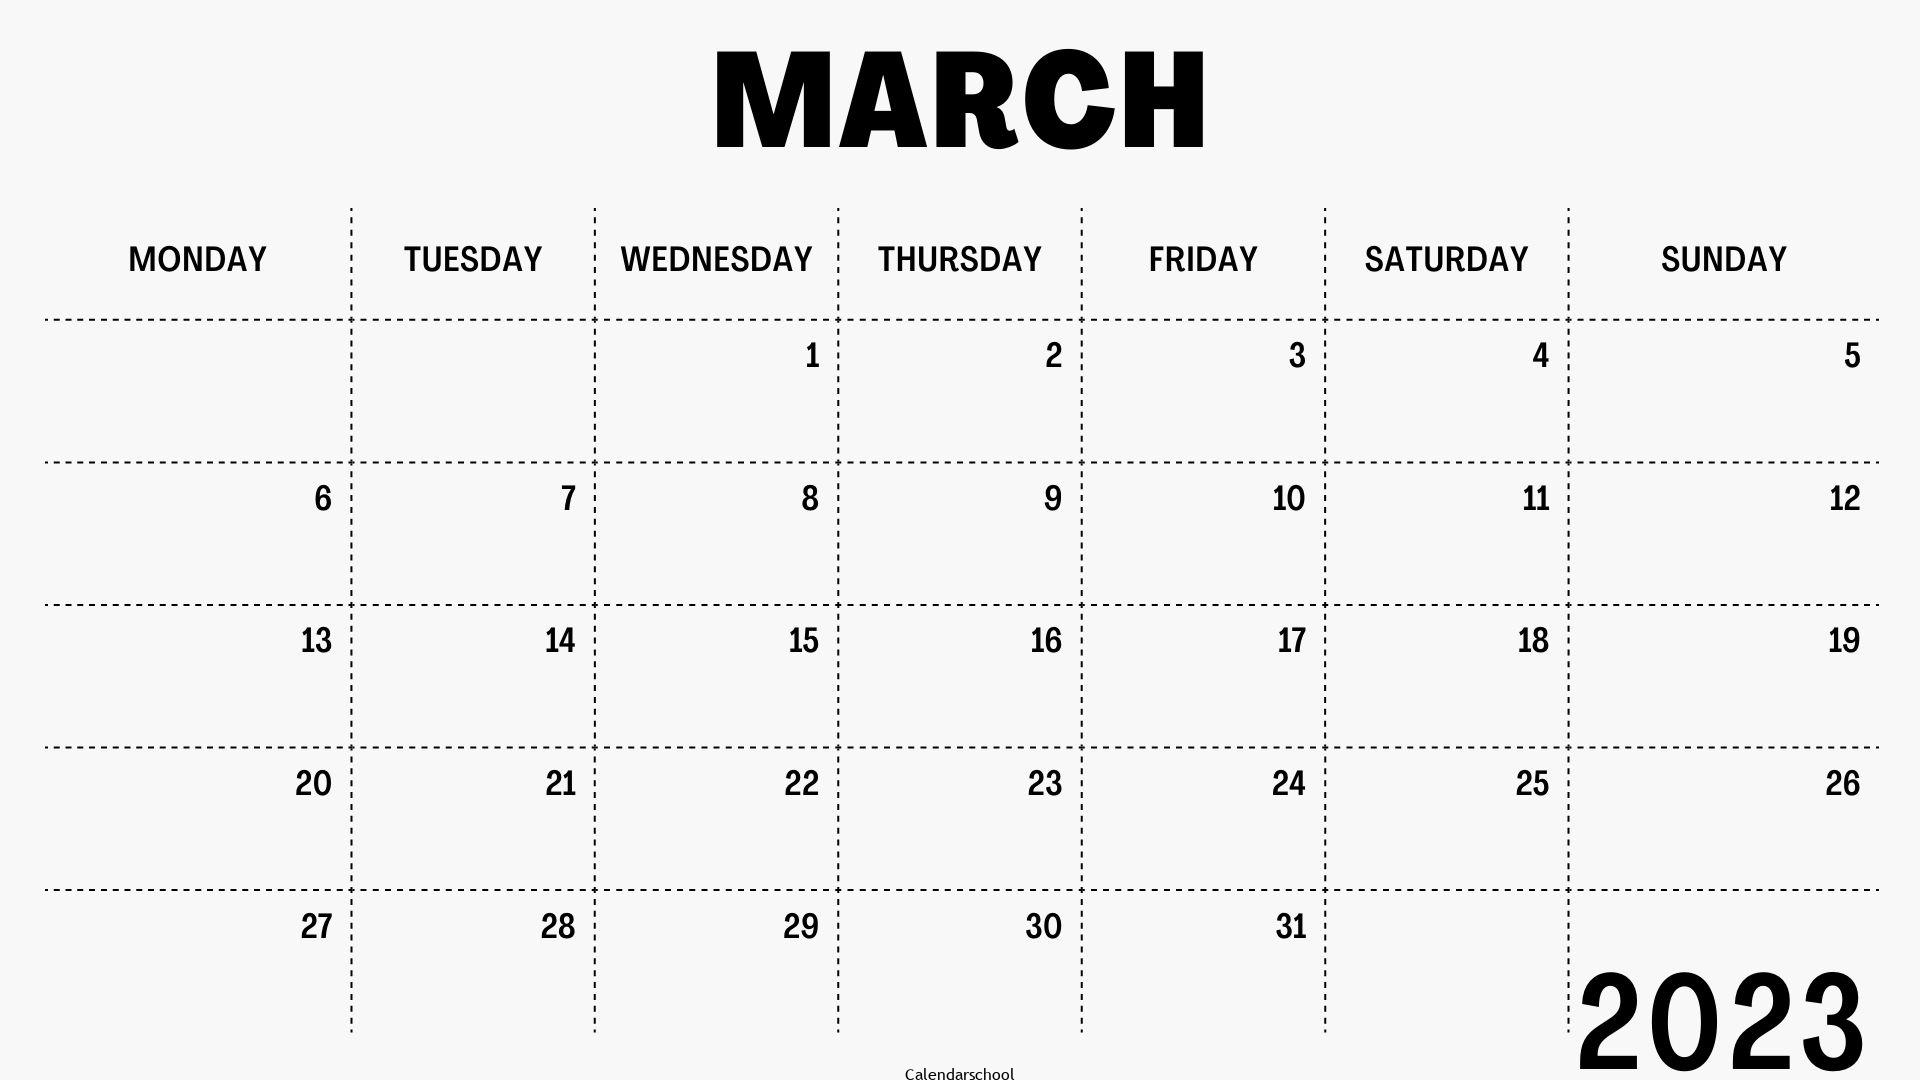 2023 March Calendar Image